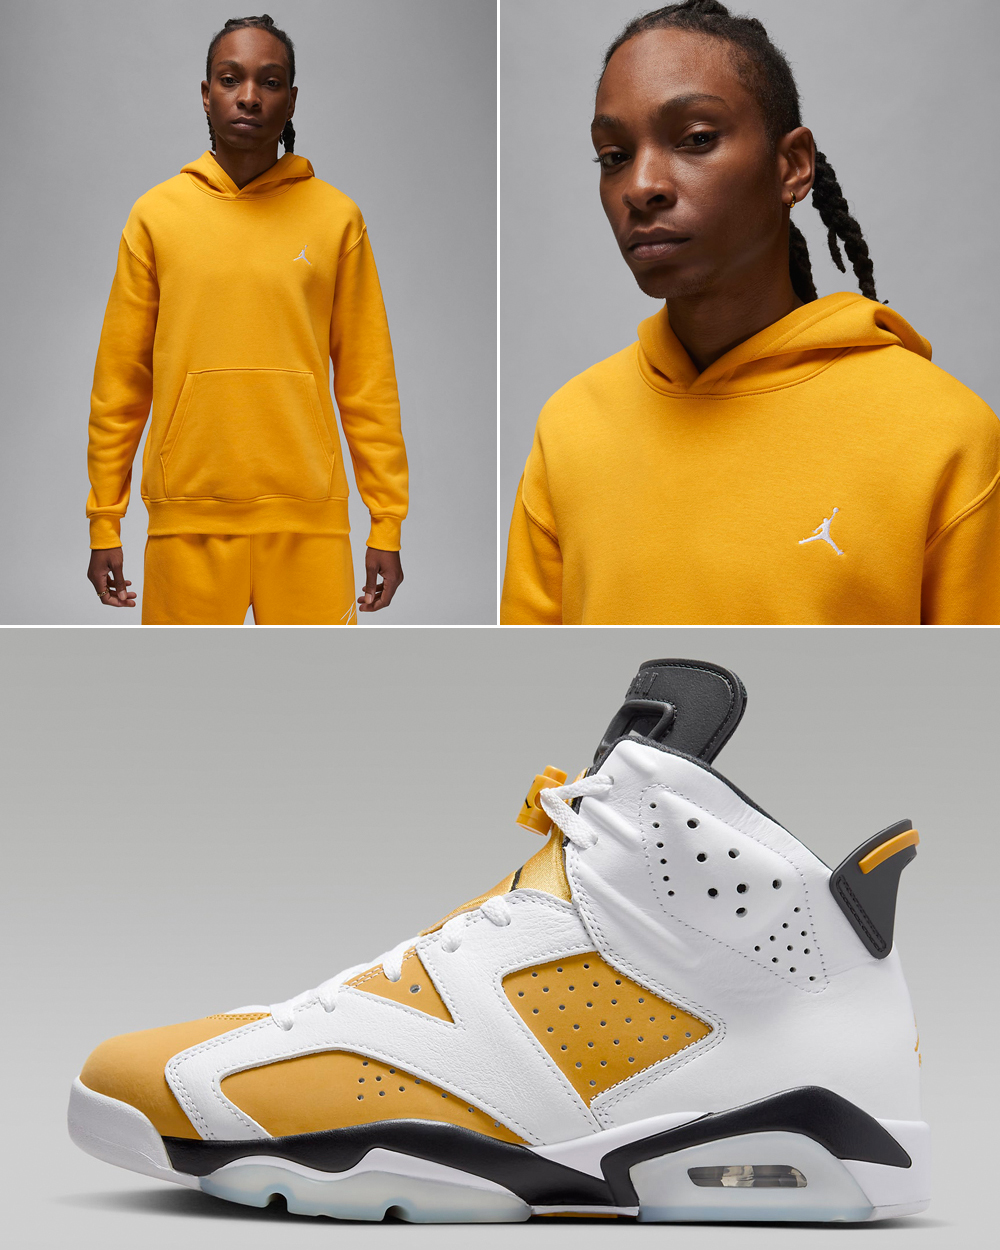 Air-Jordan-6-Yellow-Ochre-Hoodie-Outfit